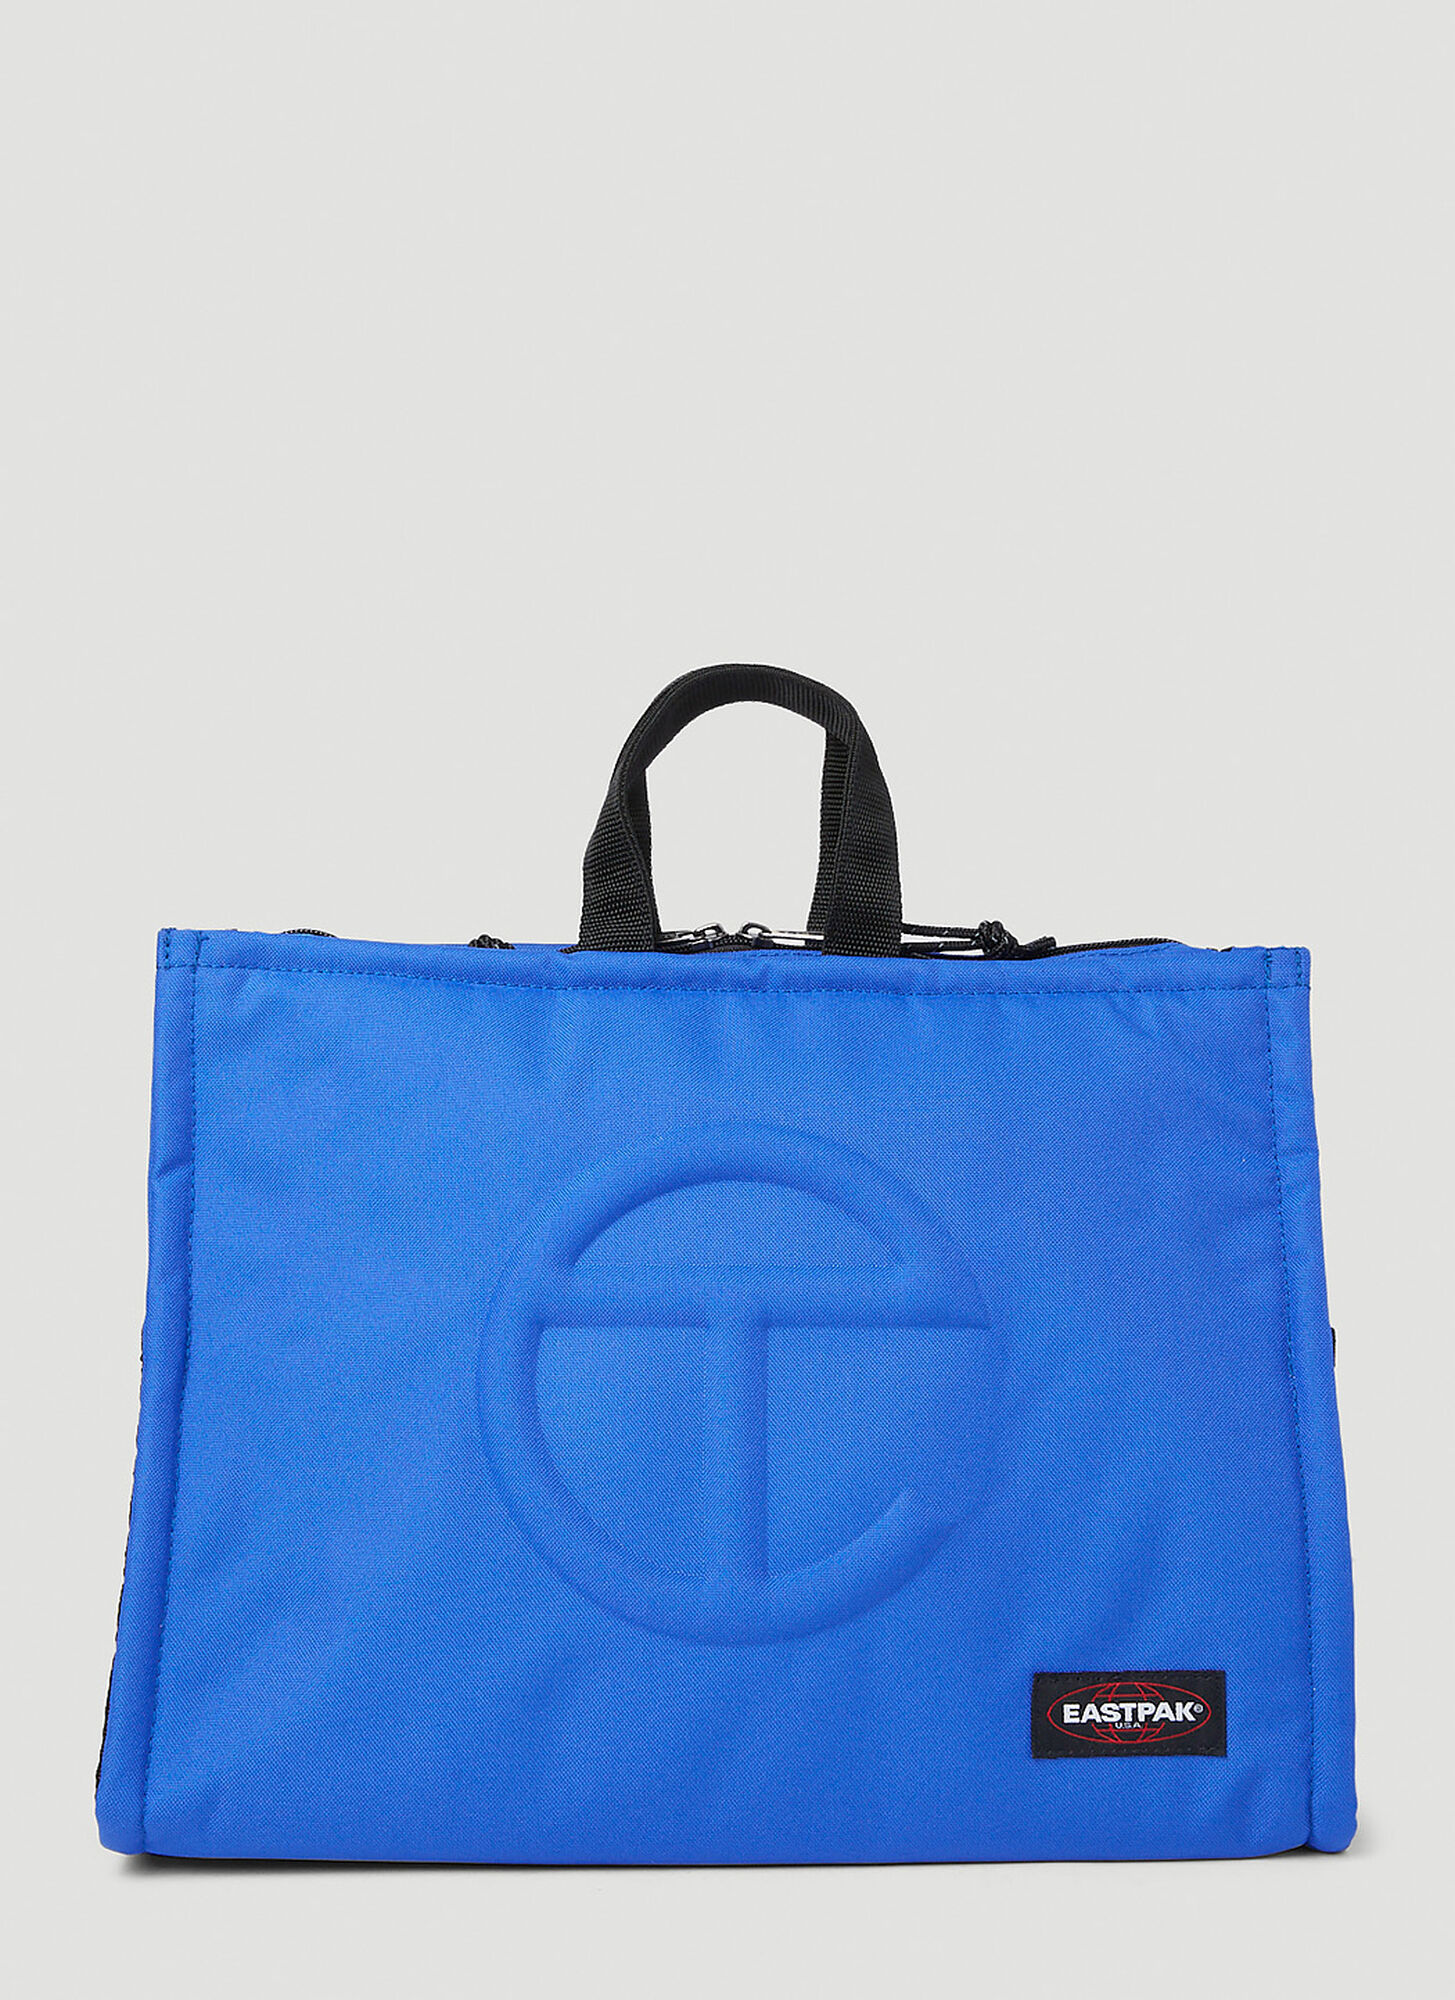 Eastpak X Telfar Shopper Convertible Medium Tote Bag Unisex Blue